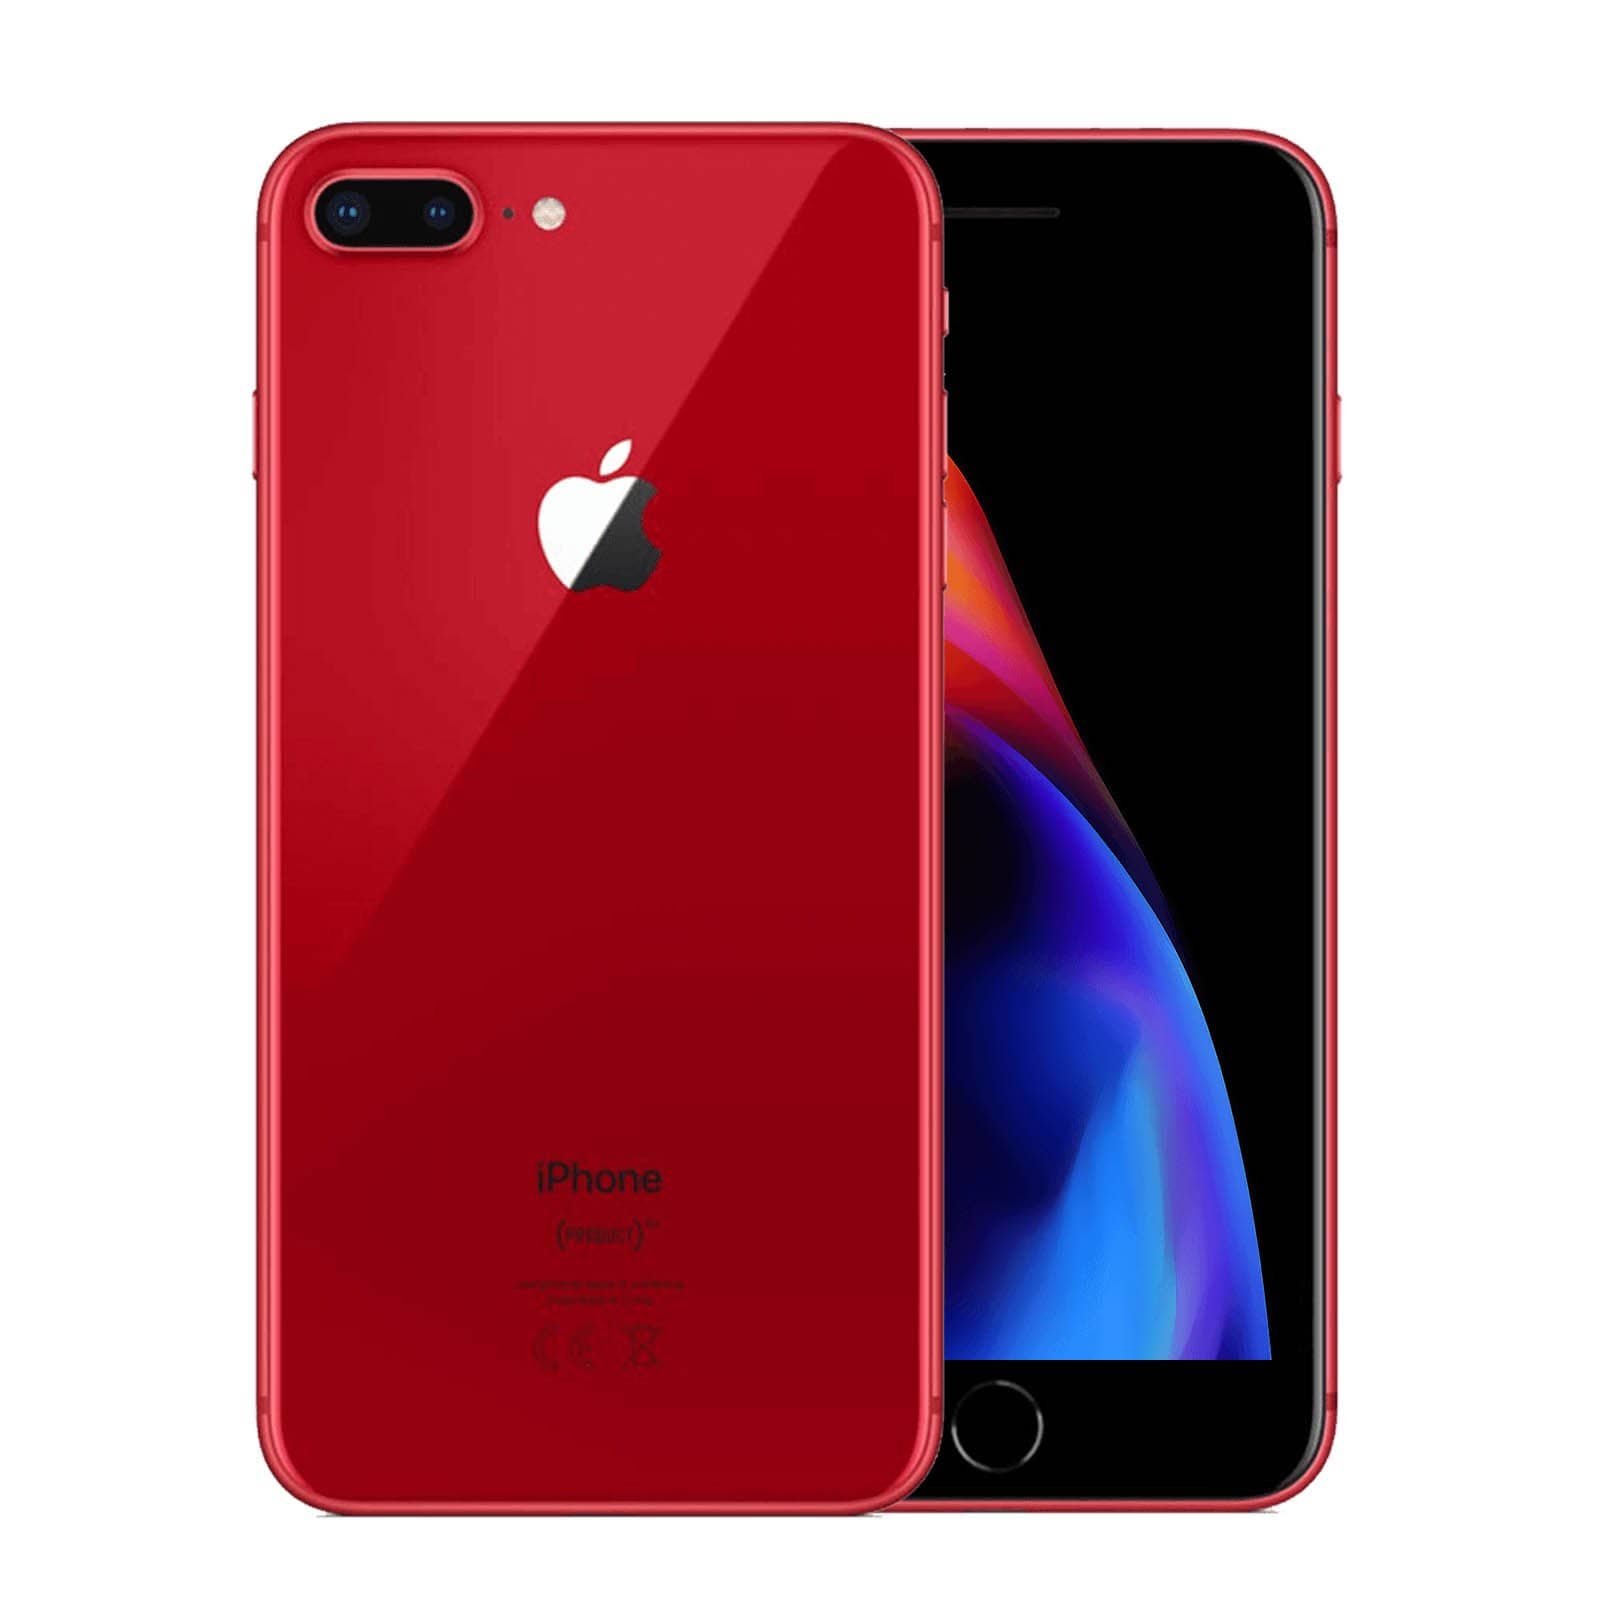 Apple iPhone 8 Plus 64GB Product Red Pristine - Unlocked 64GB Product Red Pristine